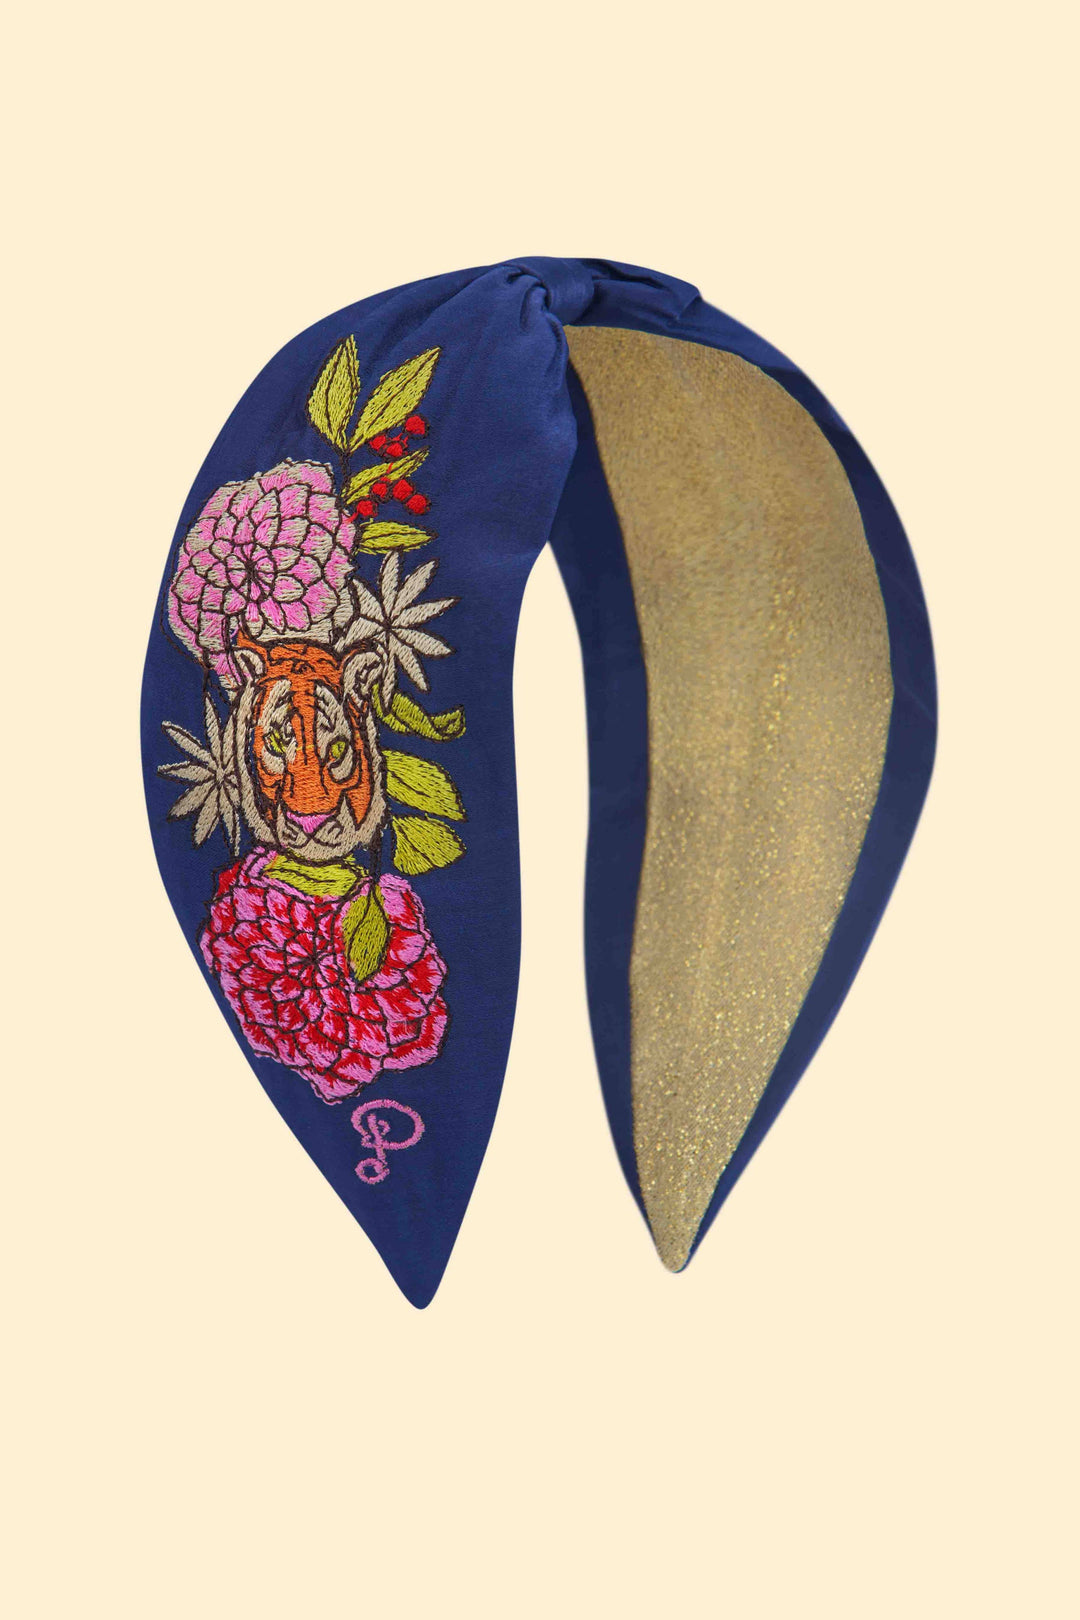 Powder Design inc - Satin Embroidered Headband - Floral Tiger Face in Indigo